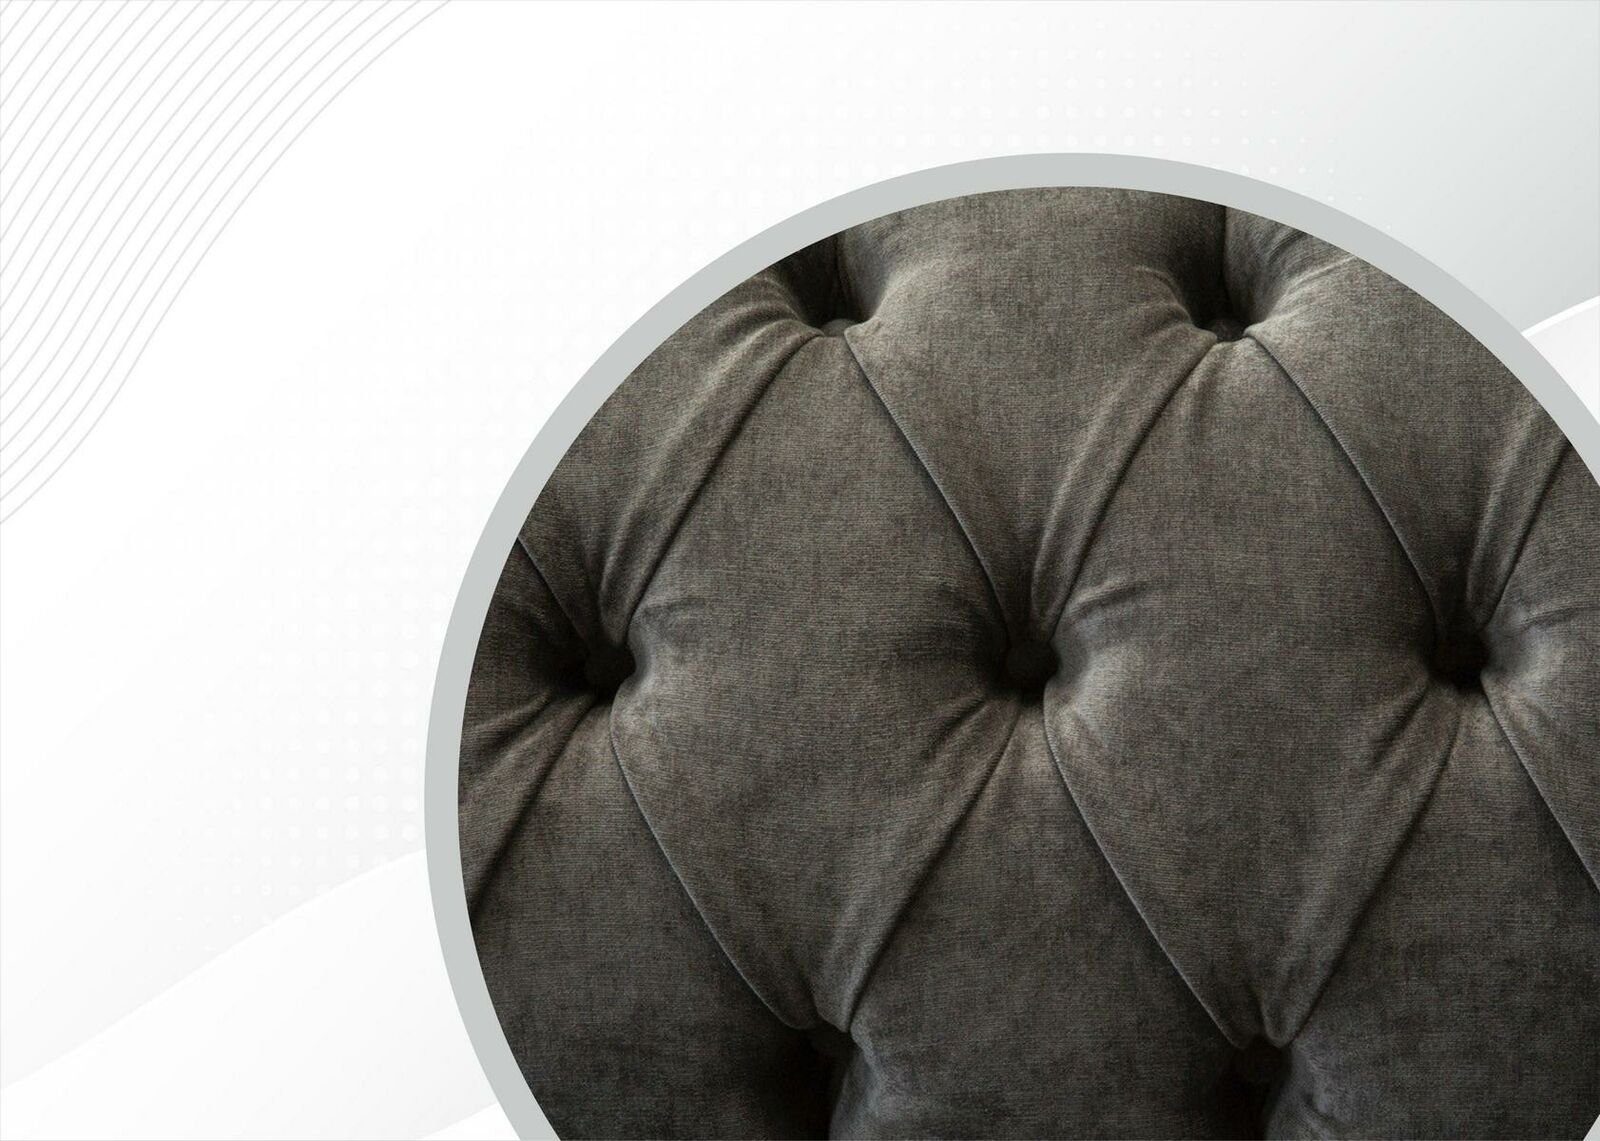 JVmoebel Chesterfield-Sofa, Klassische Chesterfield Grau Couchen Luxus Sofa Sofas Design Polster